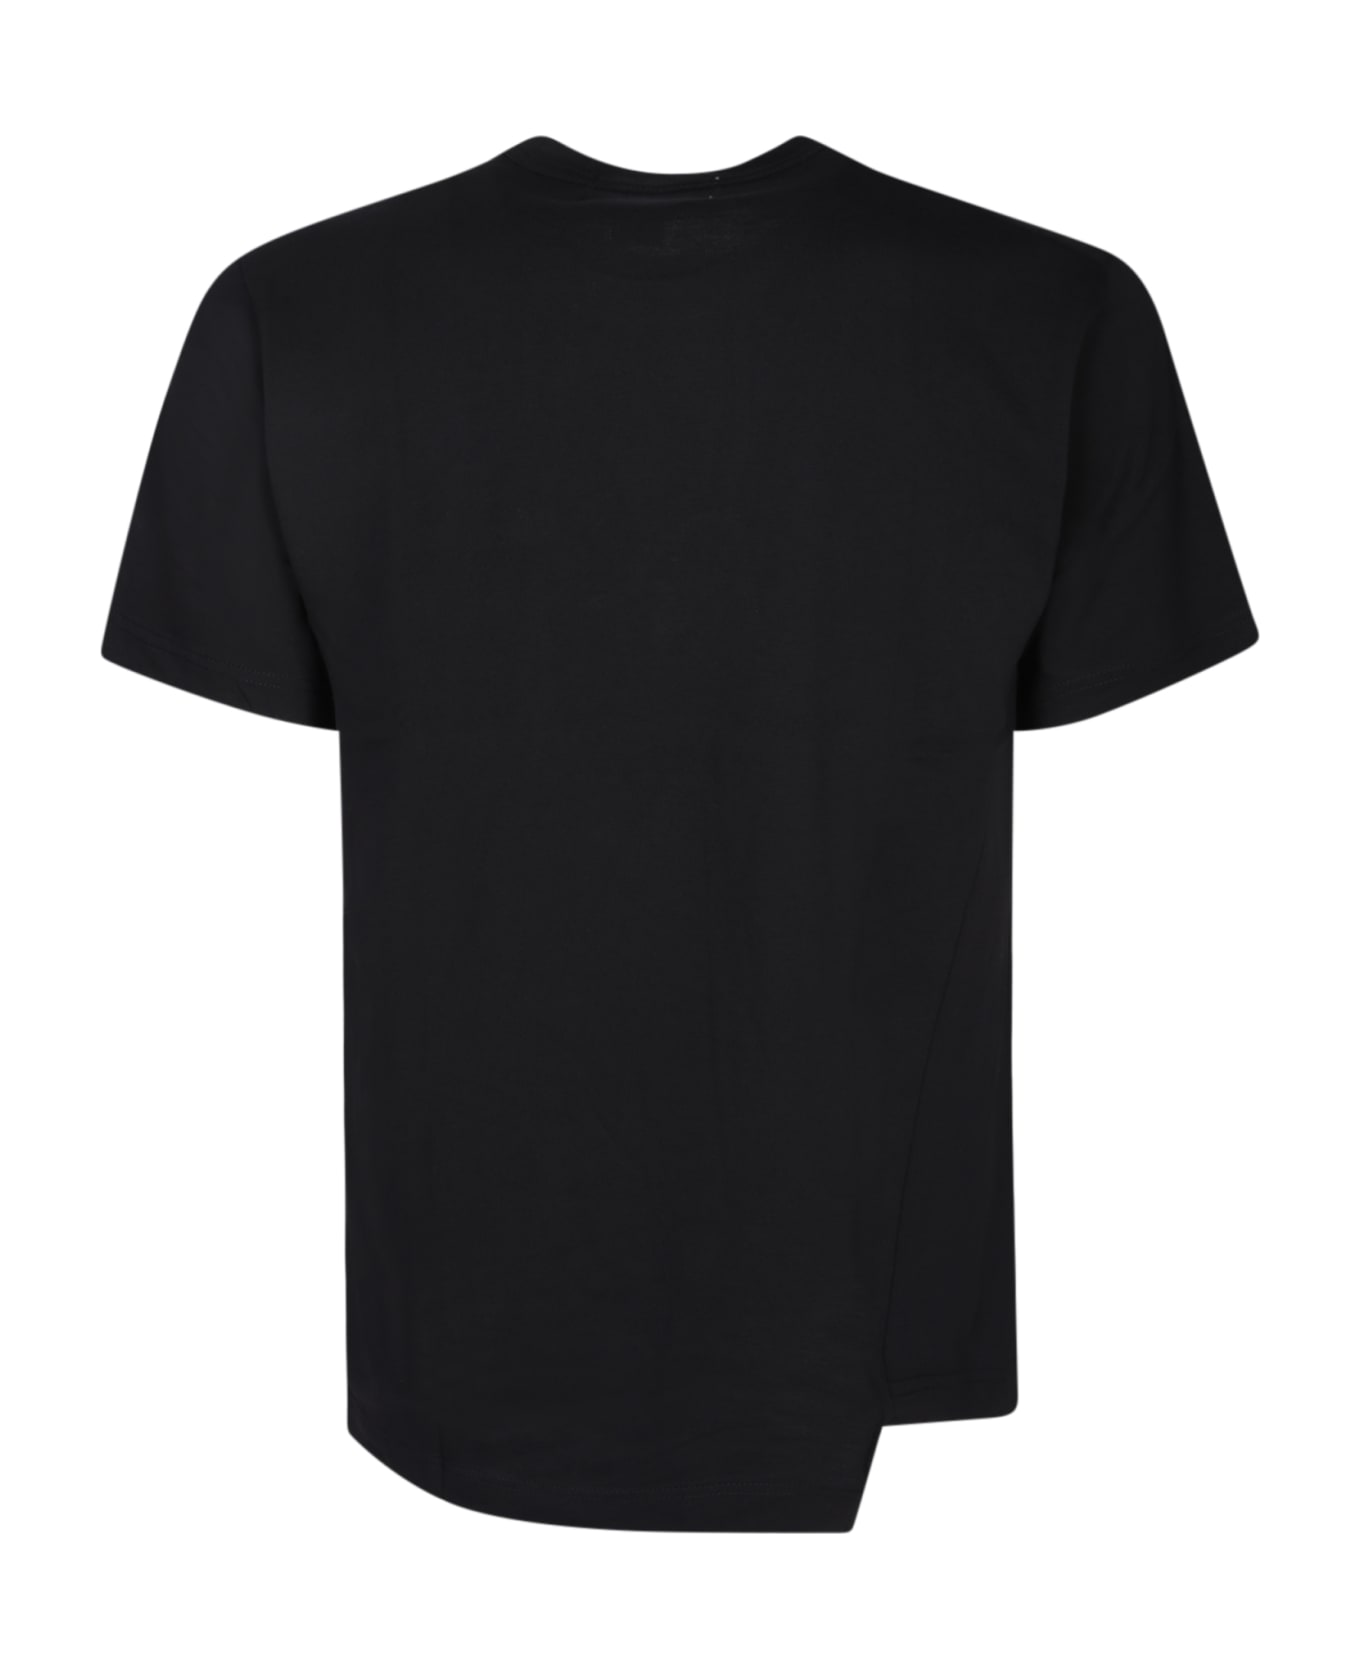 Comme des Garçons Shirt Asymmetric Black T-shirt - Black シャツ